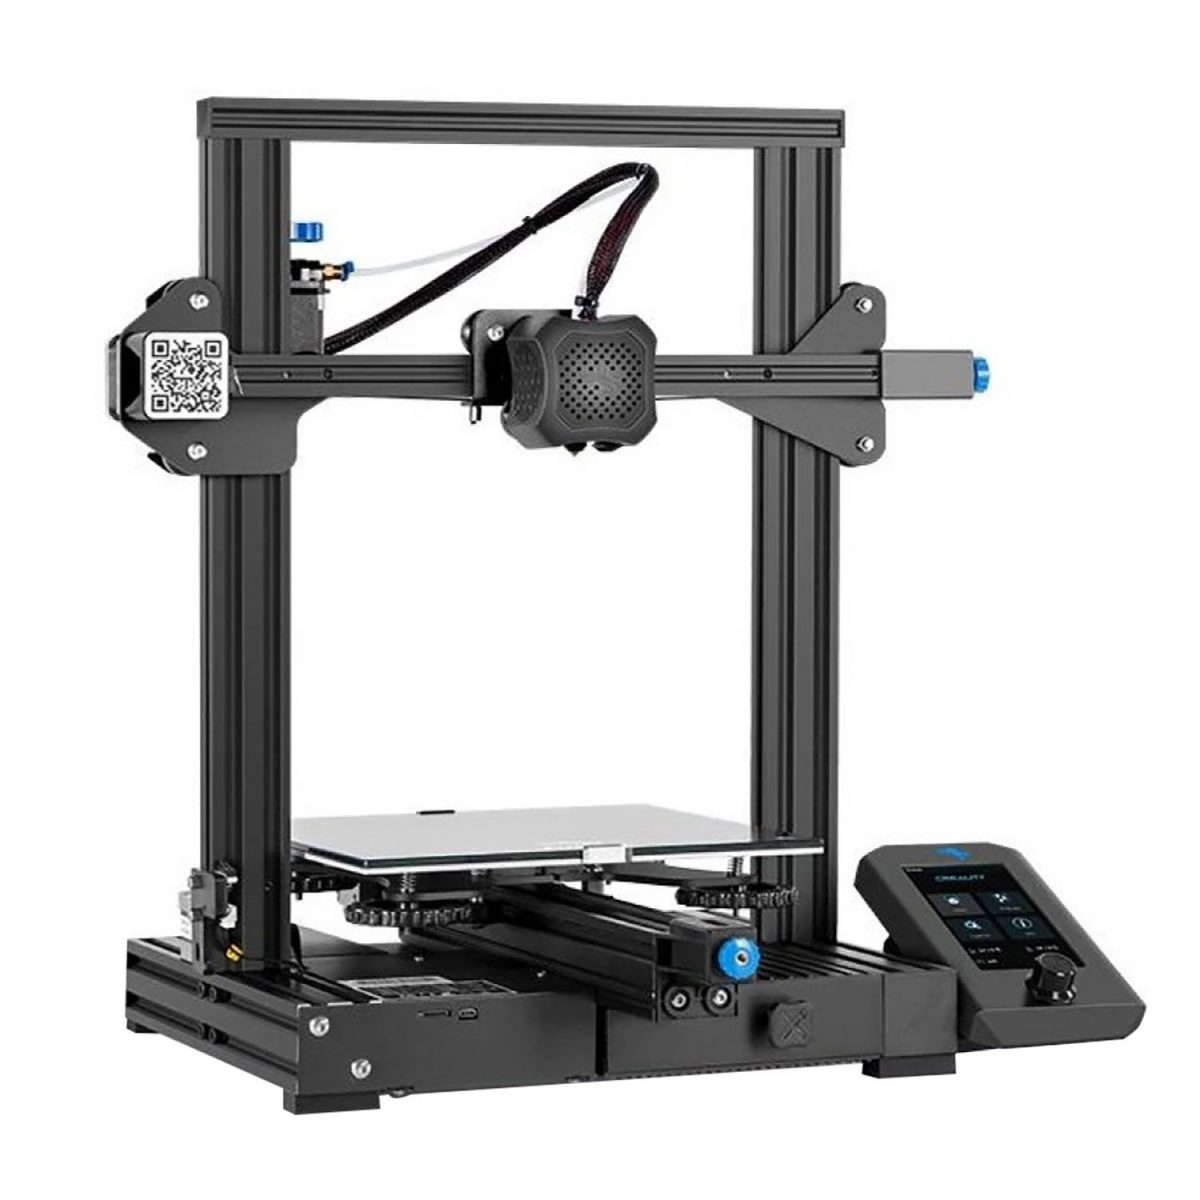 CREALITY Ender-3 V2 3D Printer - Silent, Carbo-Glass, Resume Print, DIY FDM, Build Size 22x22x25cm - CREALITY 2.35.71.00.000